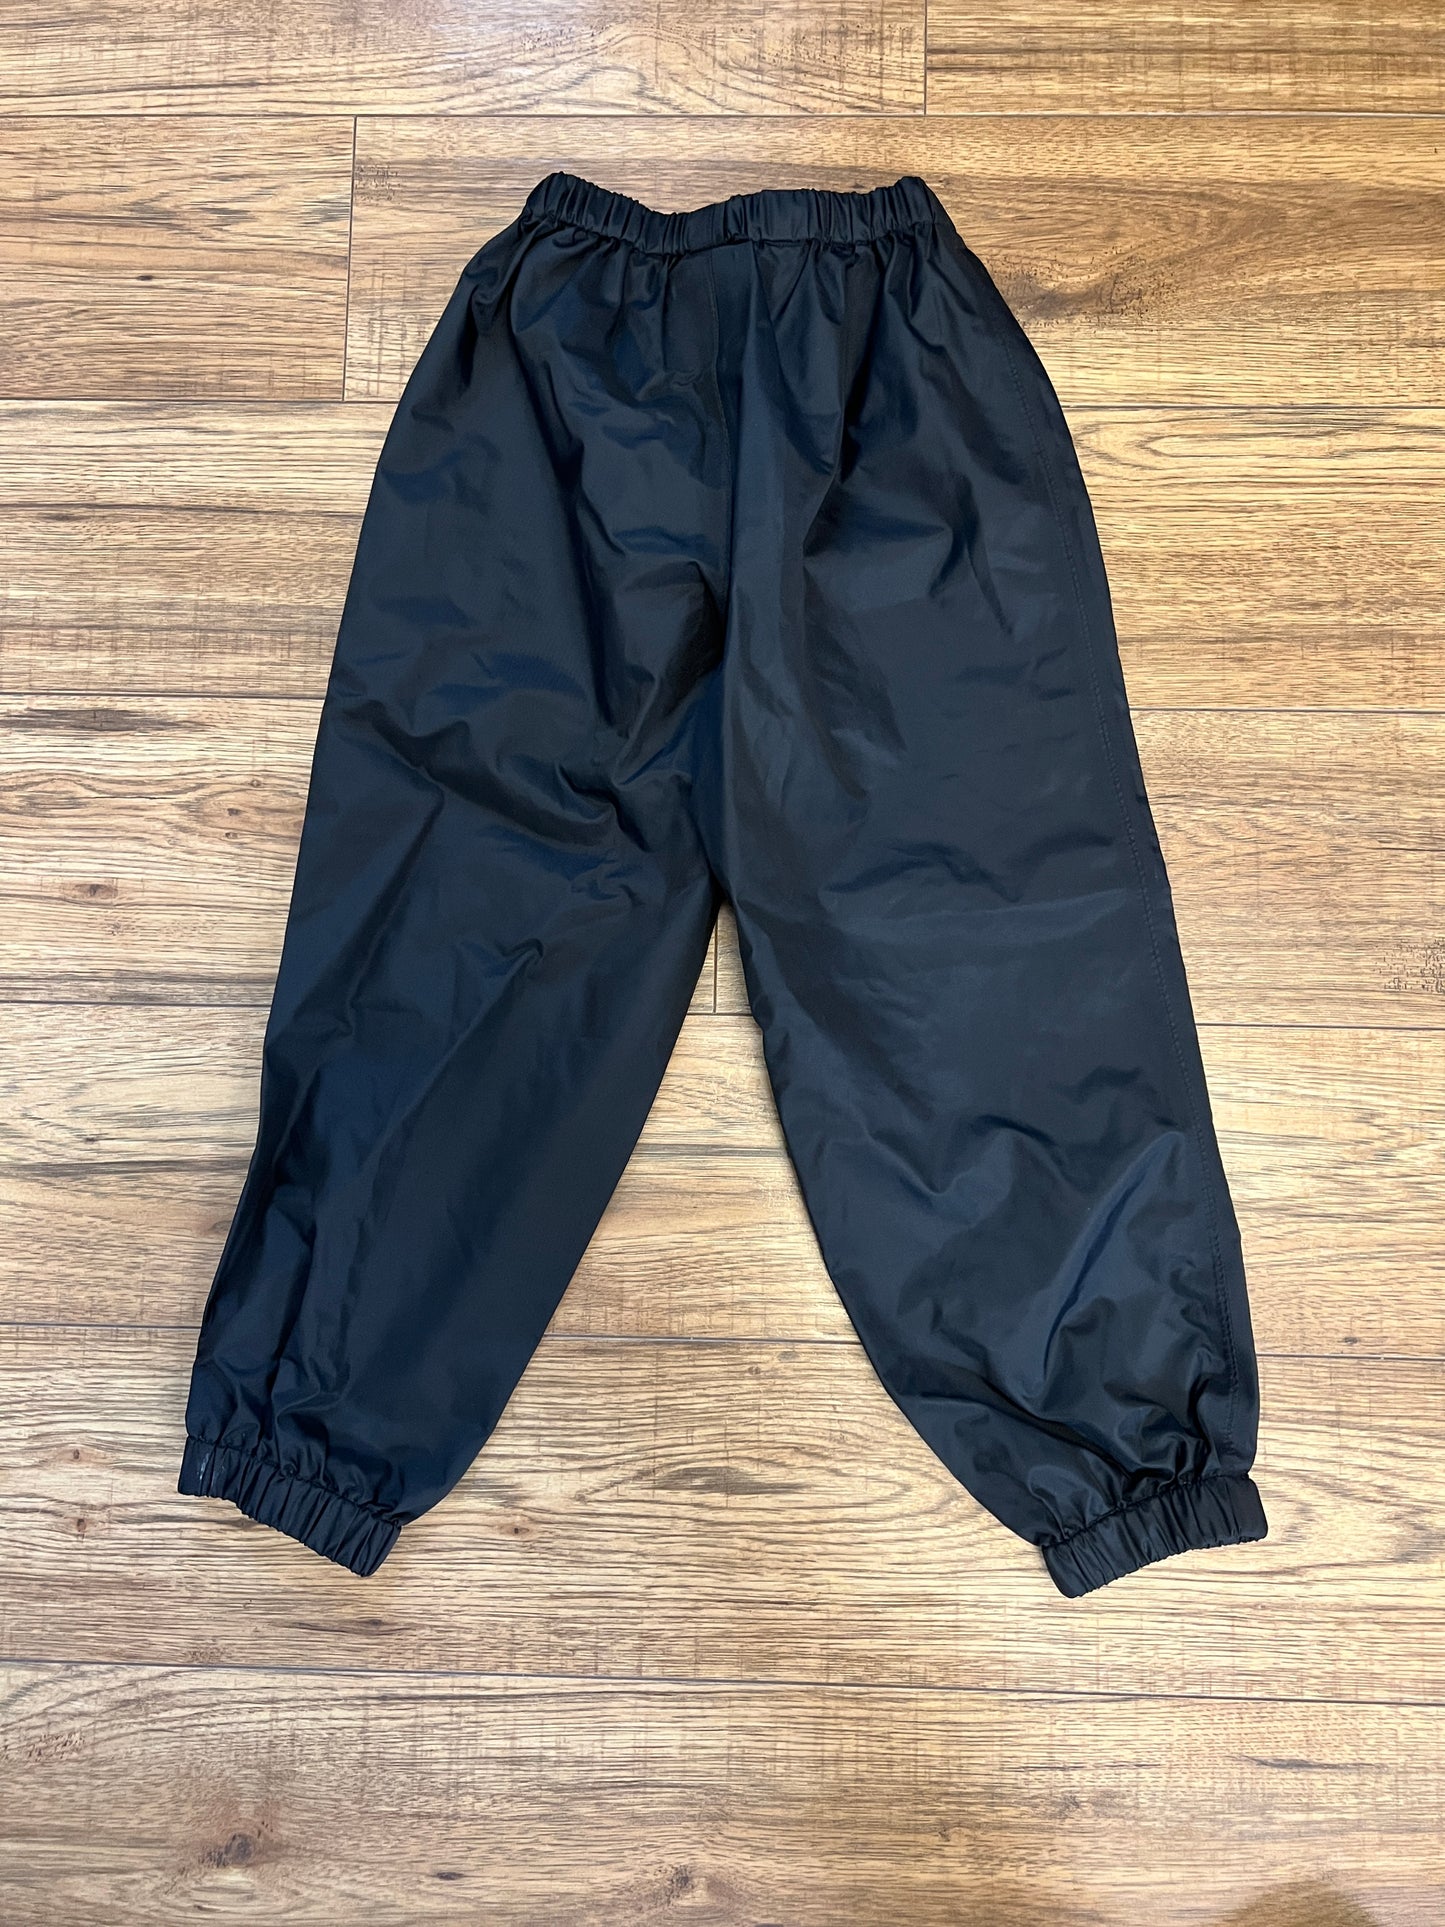 Rain Pants Child Size 6 MEC Herritage Black Waterproof Like New